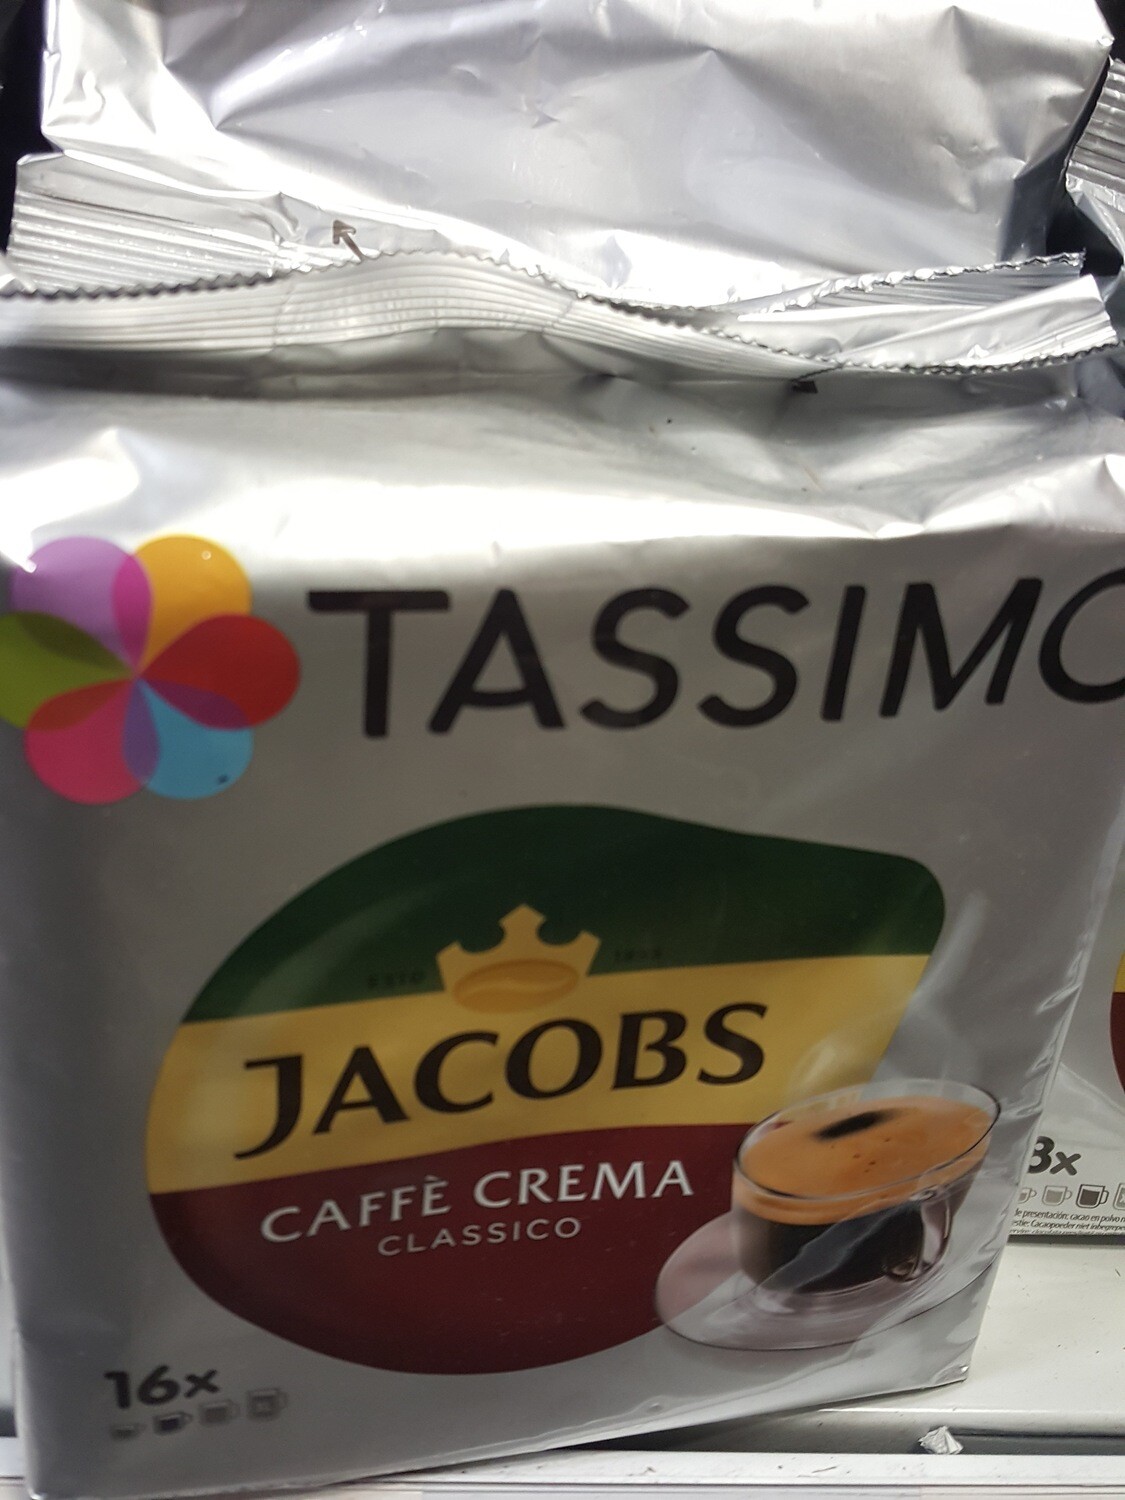 Tassimo Jacobs Crema Classico 16 Caps.